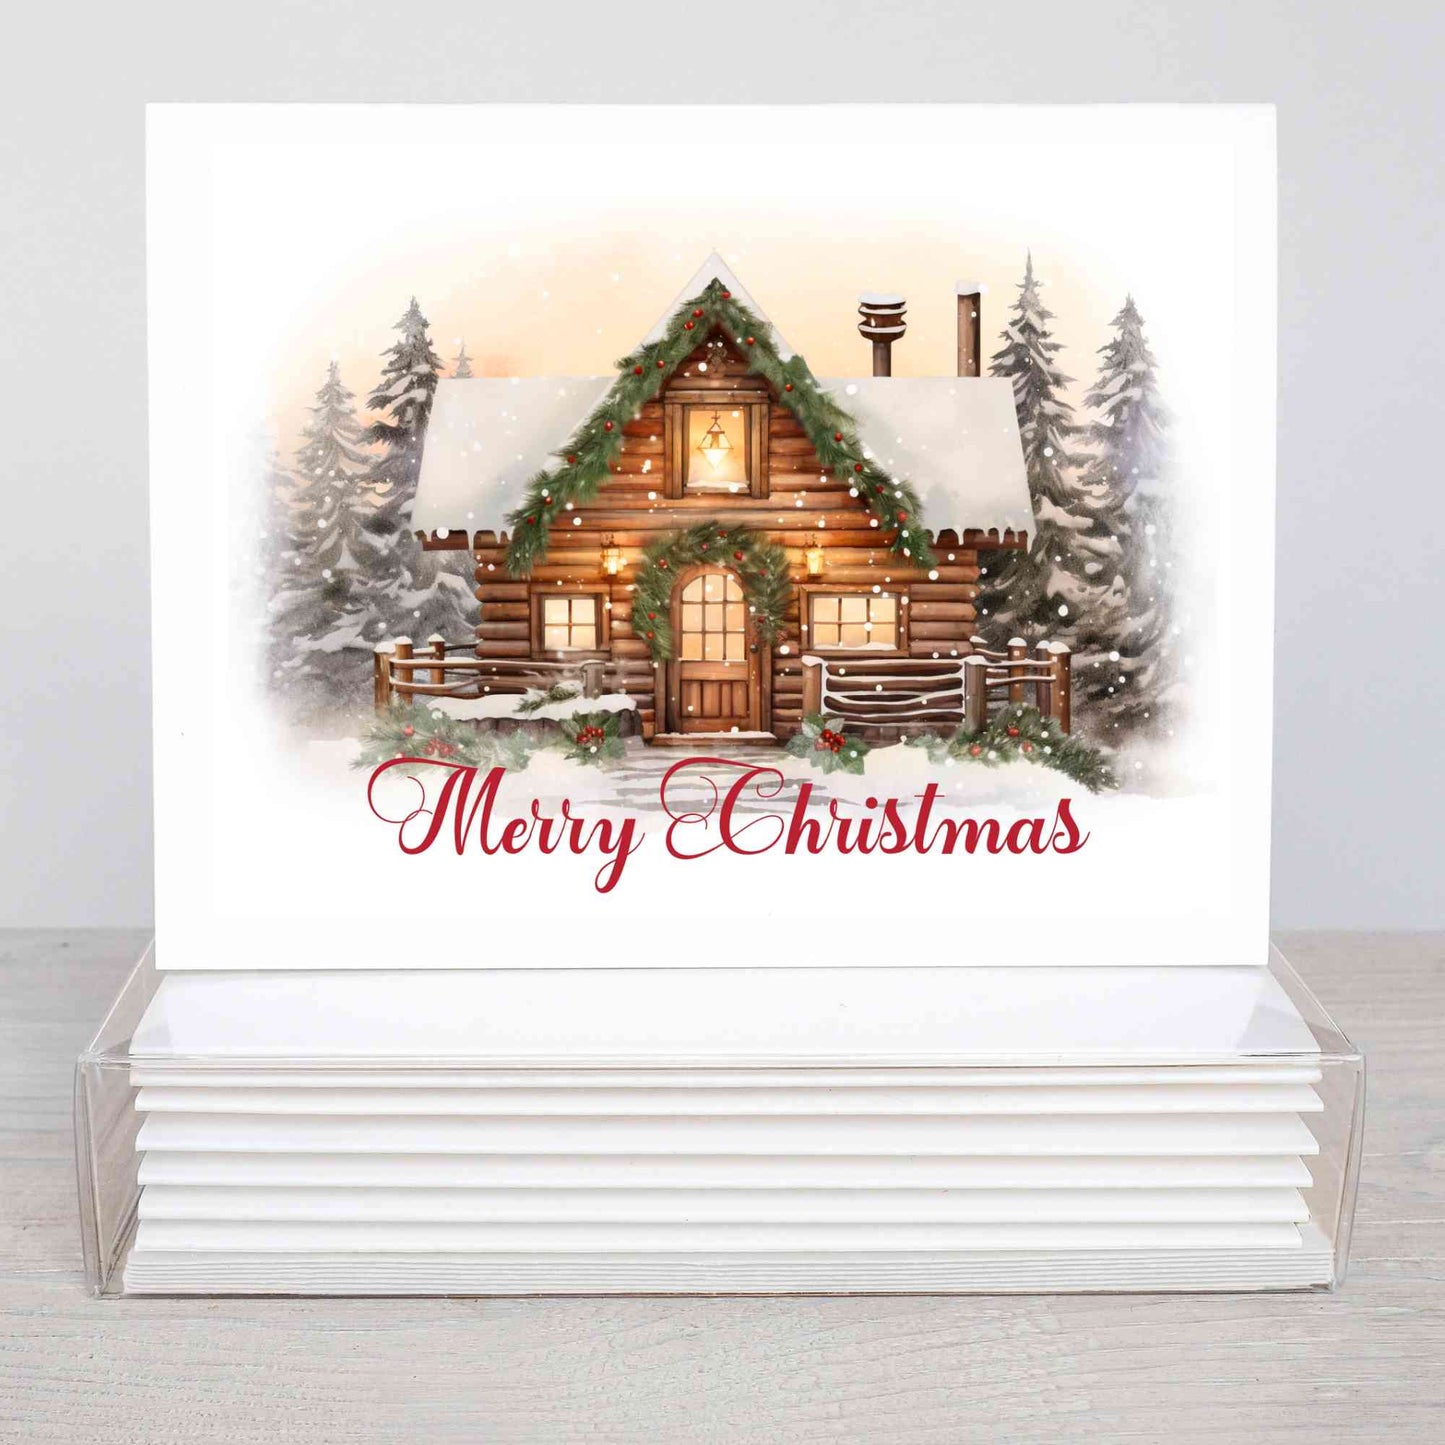 0262 - Christmas at the Cabin Christmas Card - Greeting Card